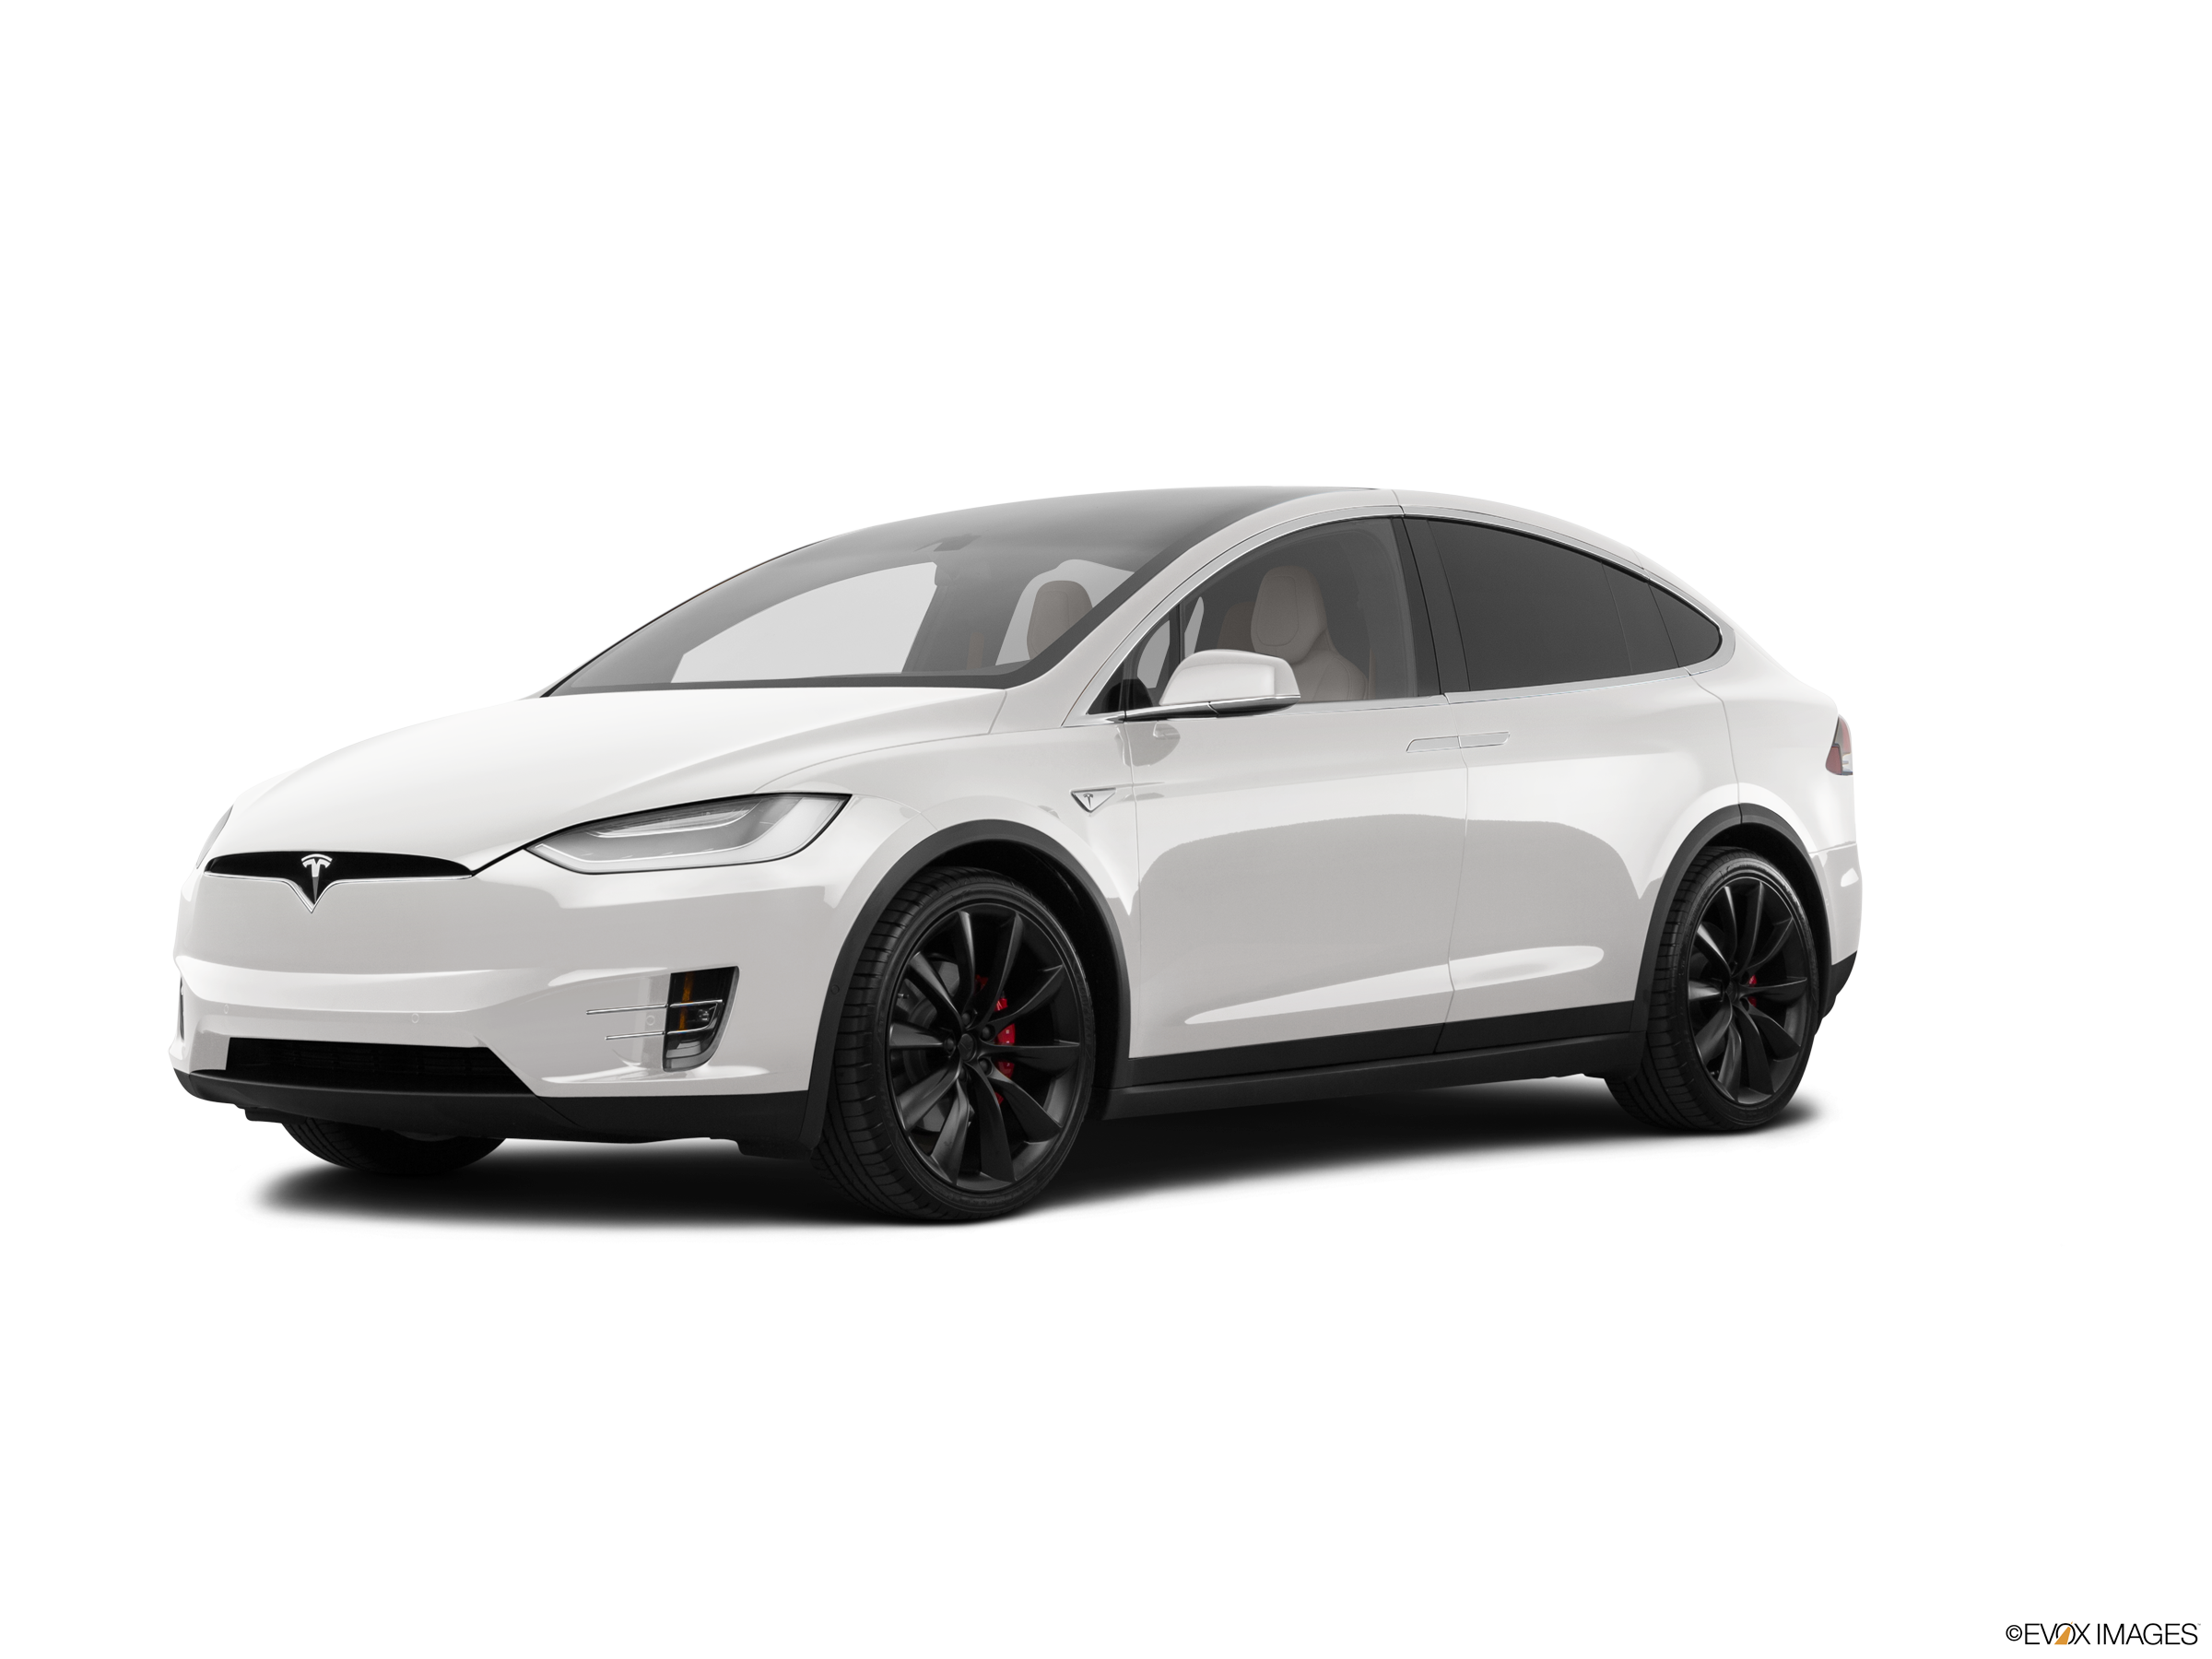 Conflict Chaise longue Guggenheim Museum 2018 Tesla Model X Values & Cars for Sale | Kelley Blue Book